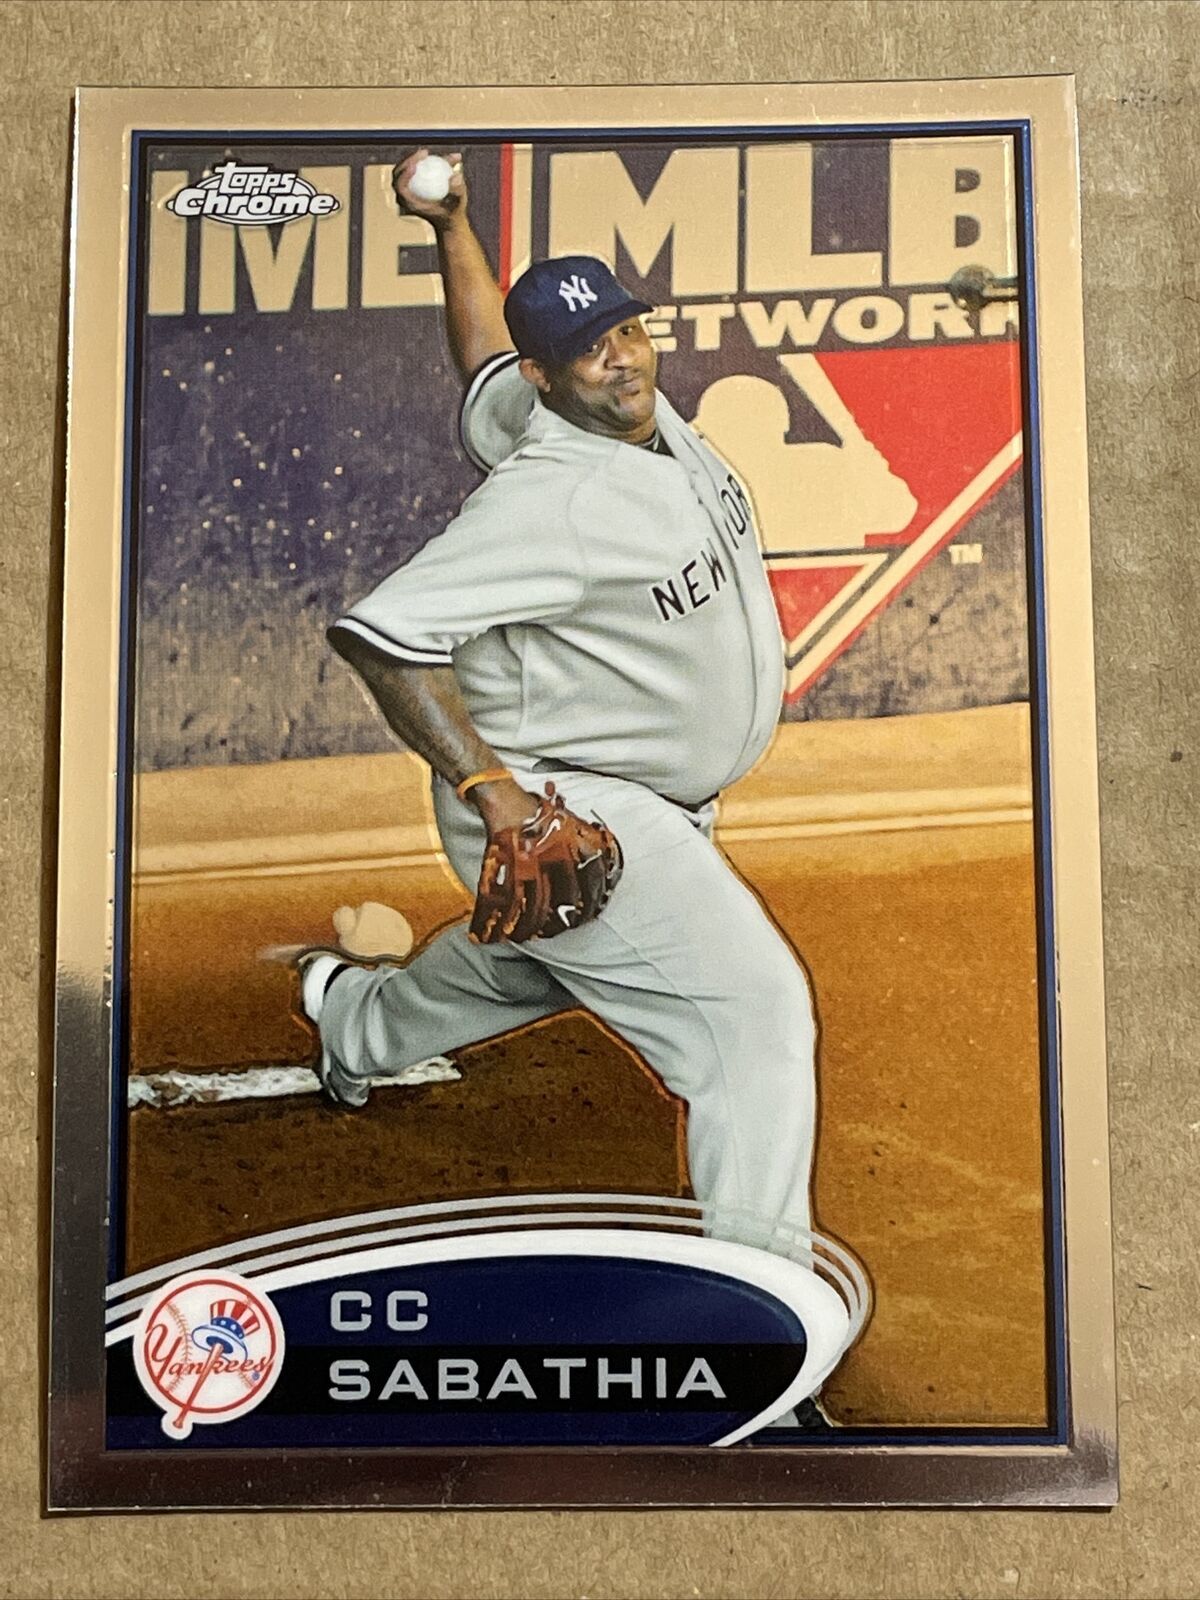 Primary image for 2012 Topps Chrome CC Sabathia Yankees